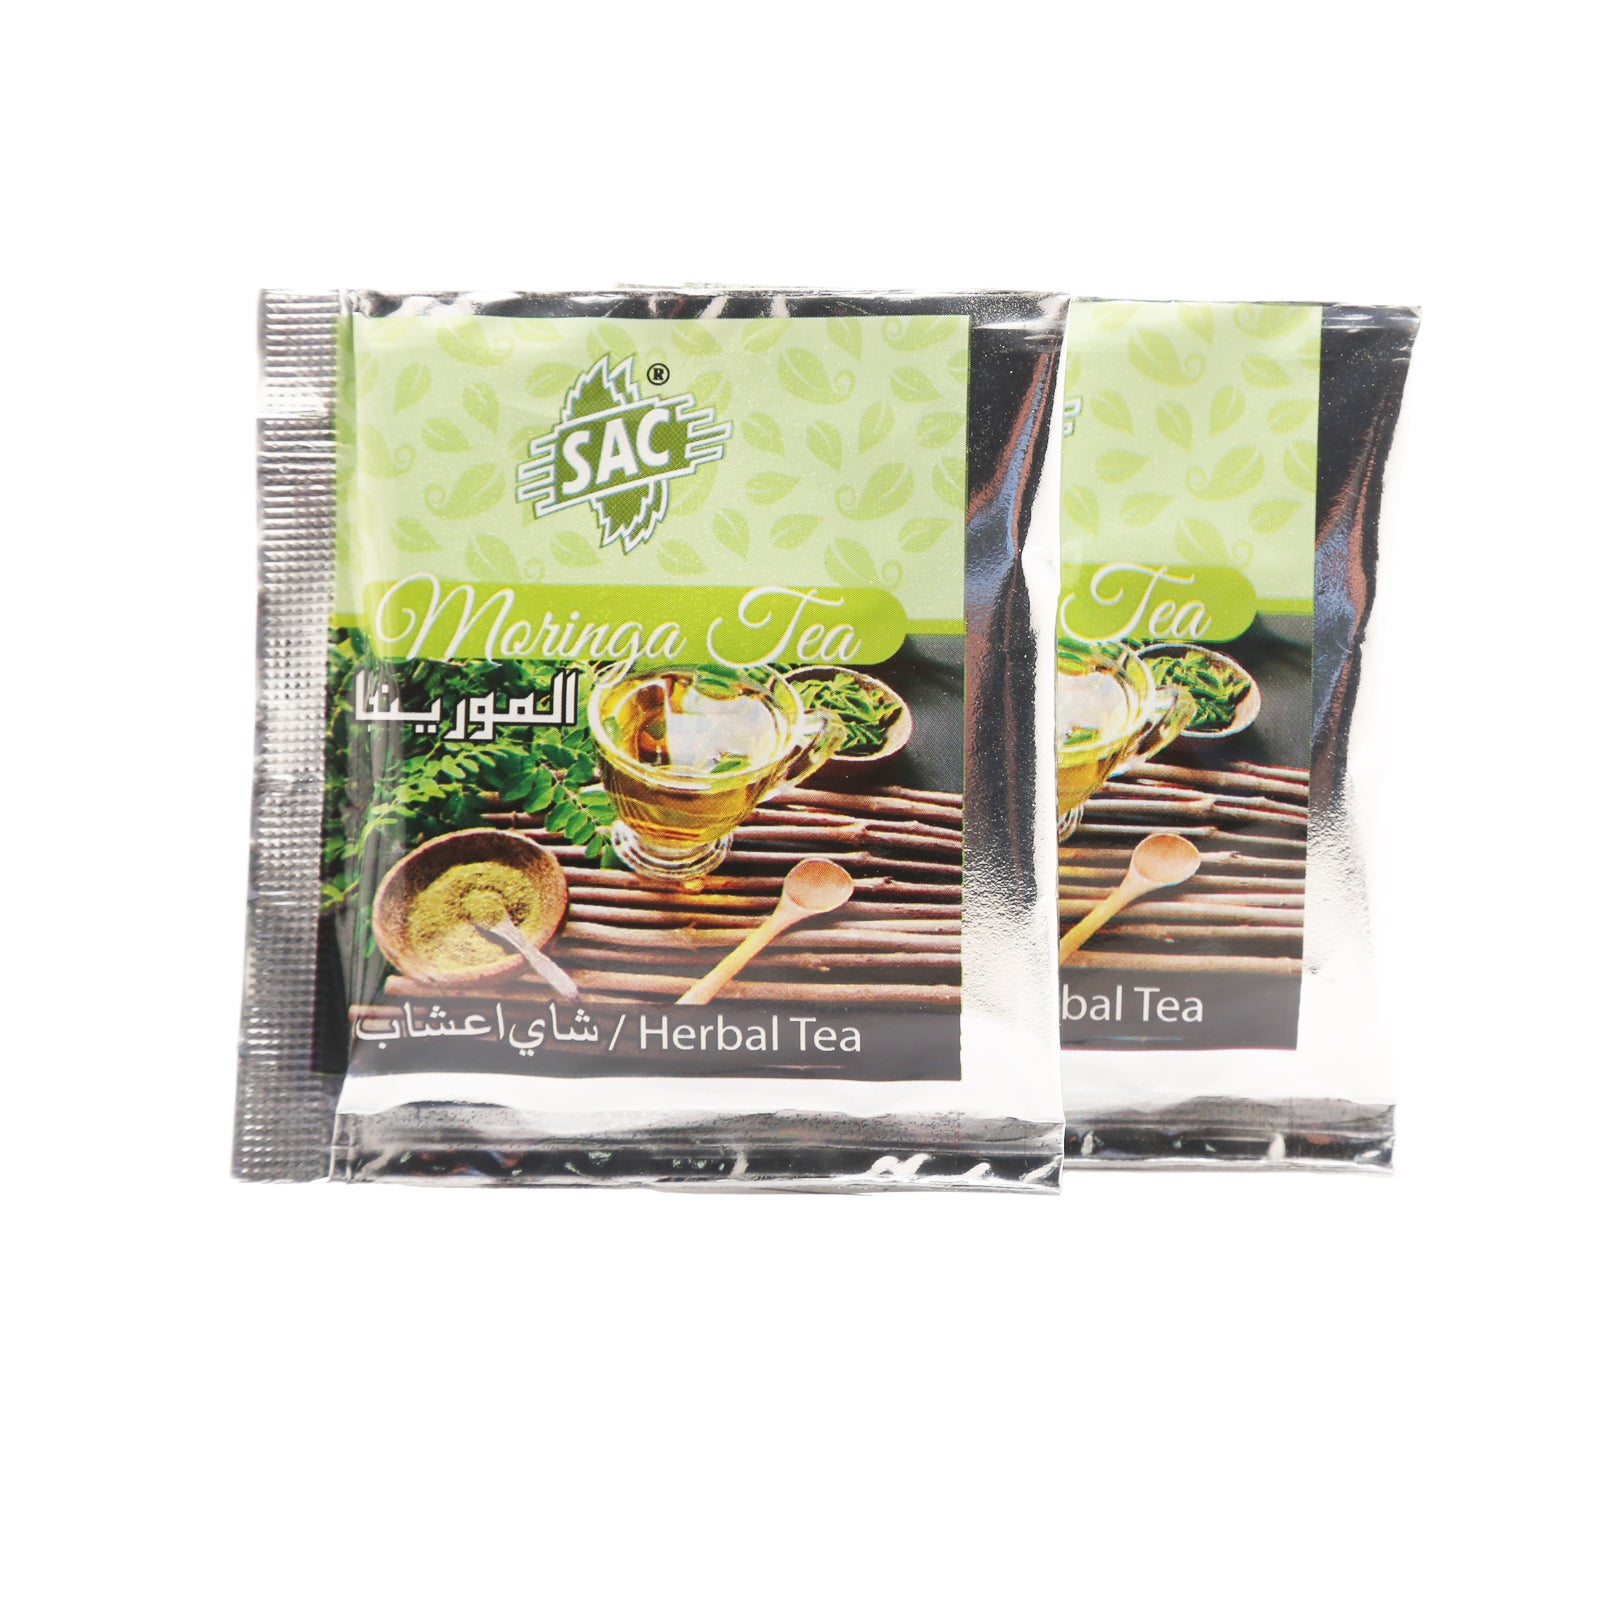 Moringa Herbal Green Tea (20 Sachets Per Pack)